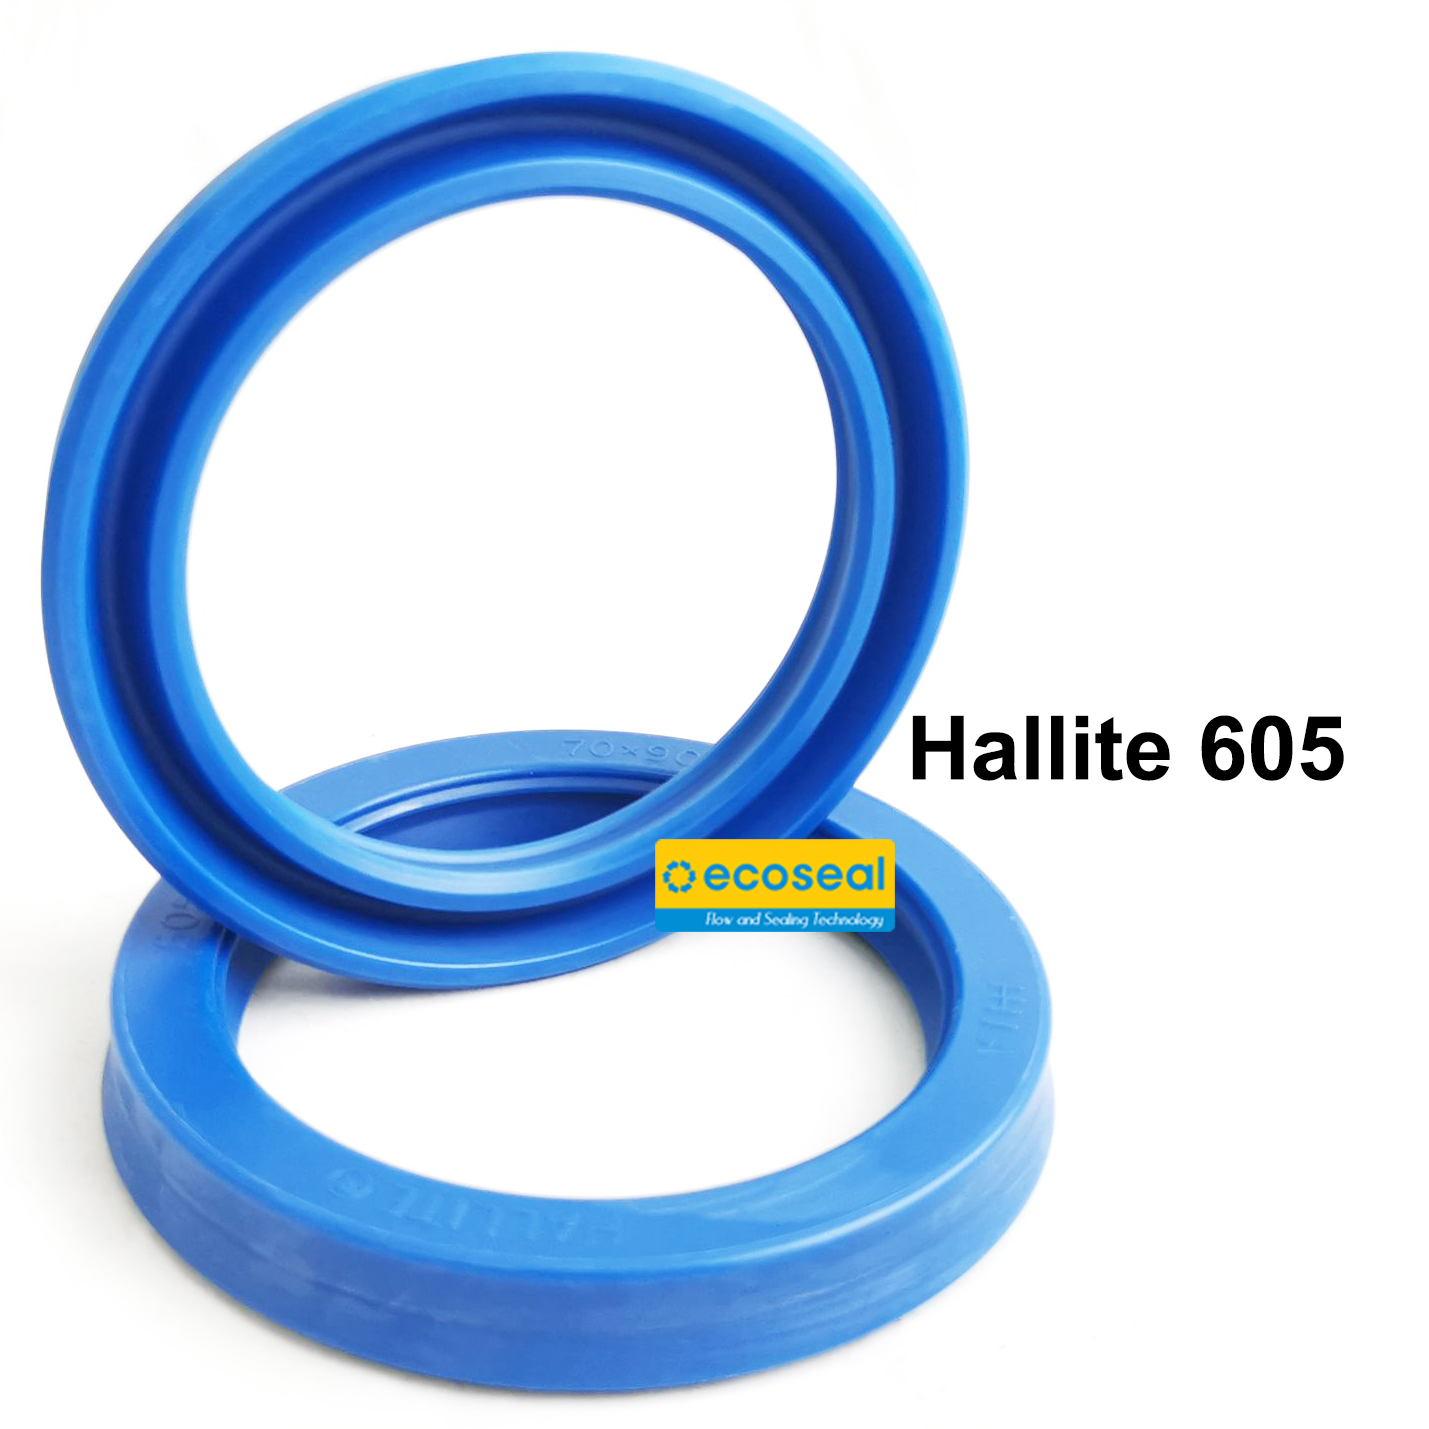 Hallite 605